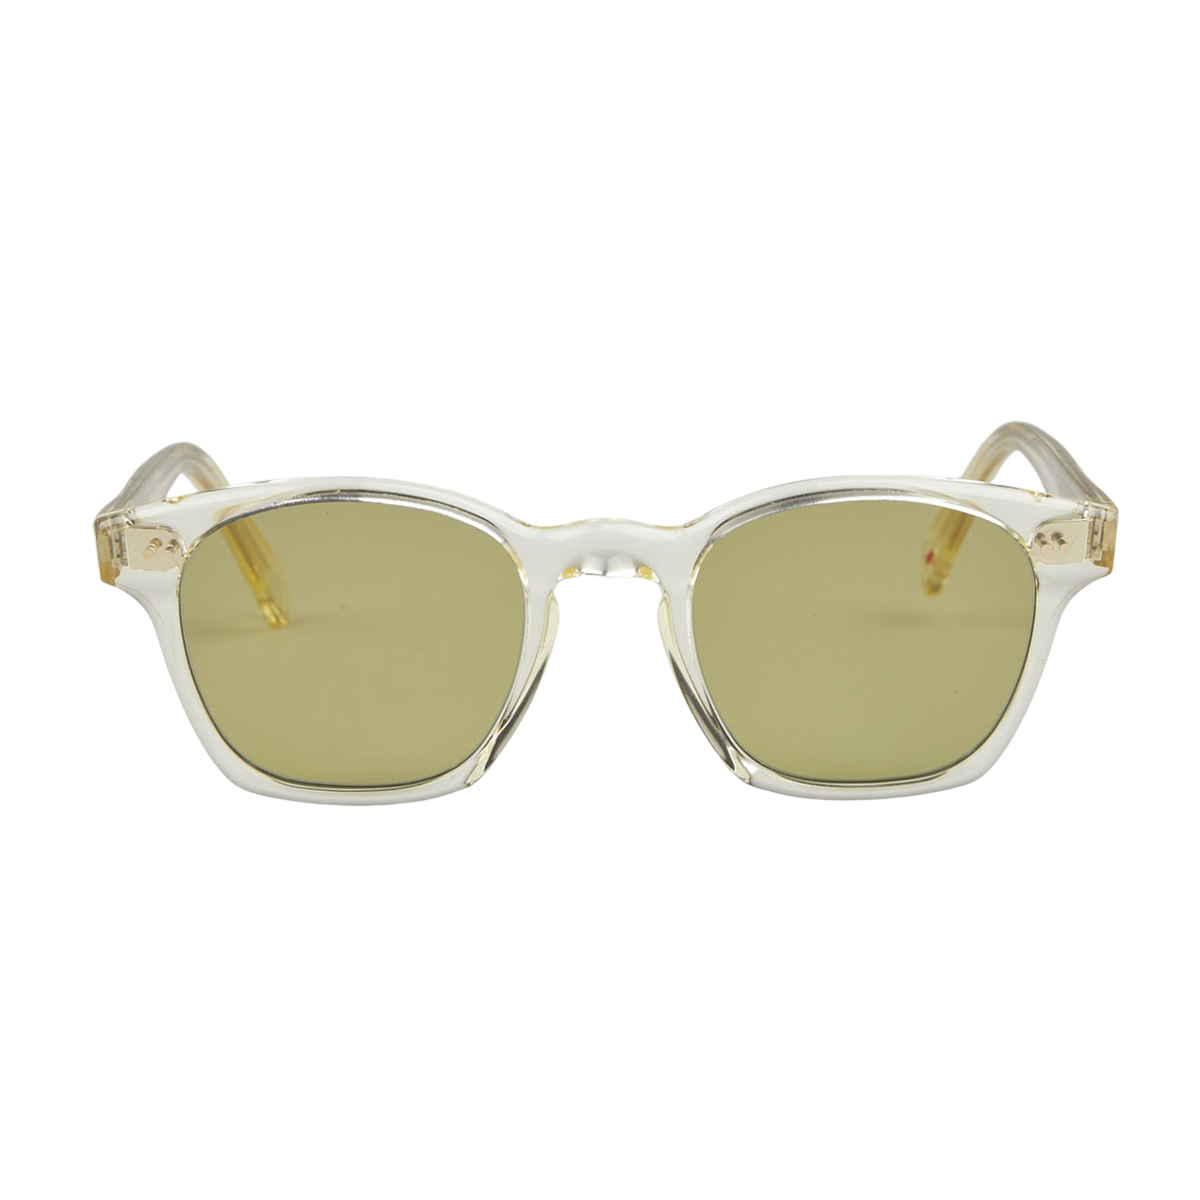 Lunettes Alf Yellow Transparent A20.01.008 Sunglasses Front